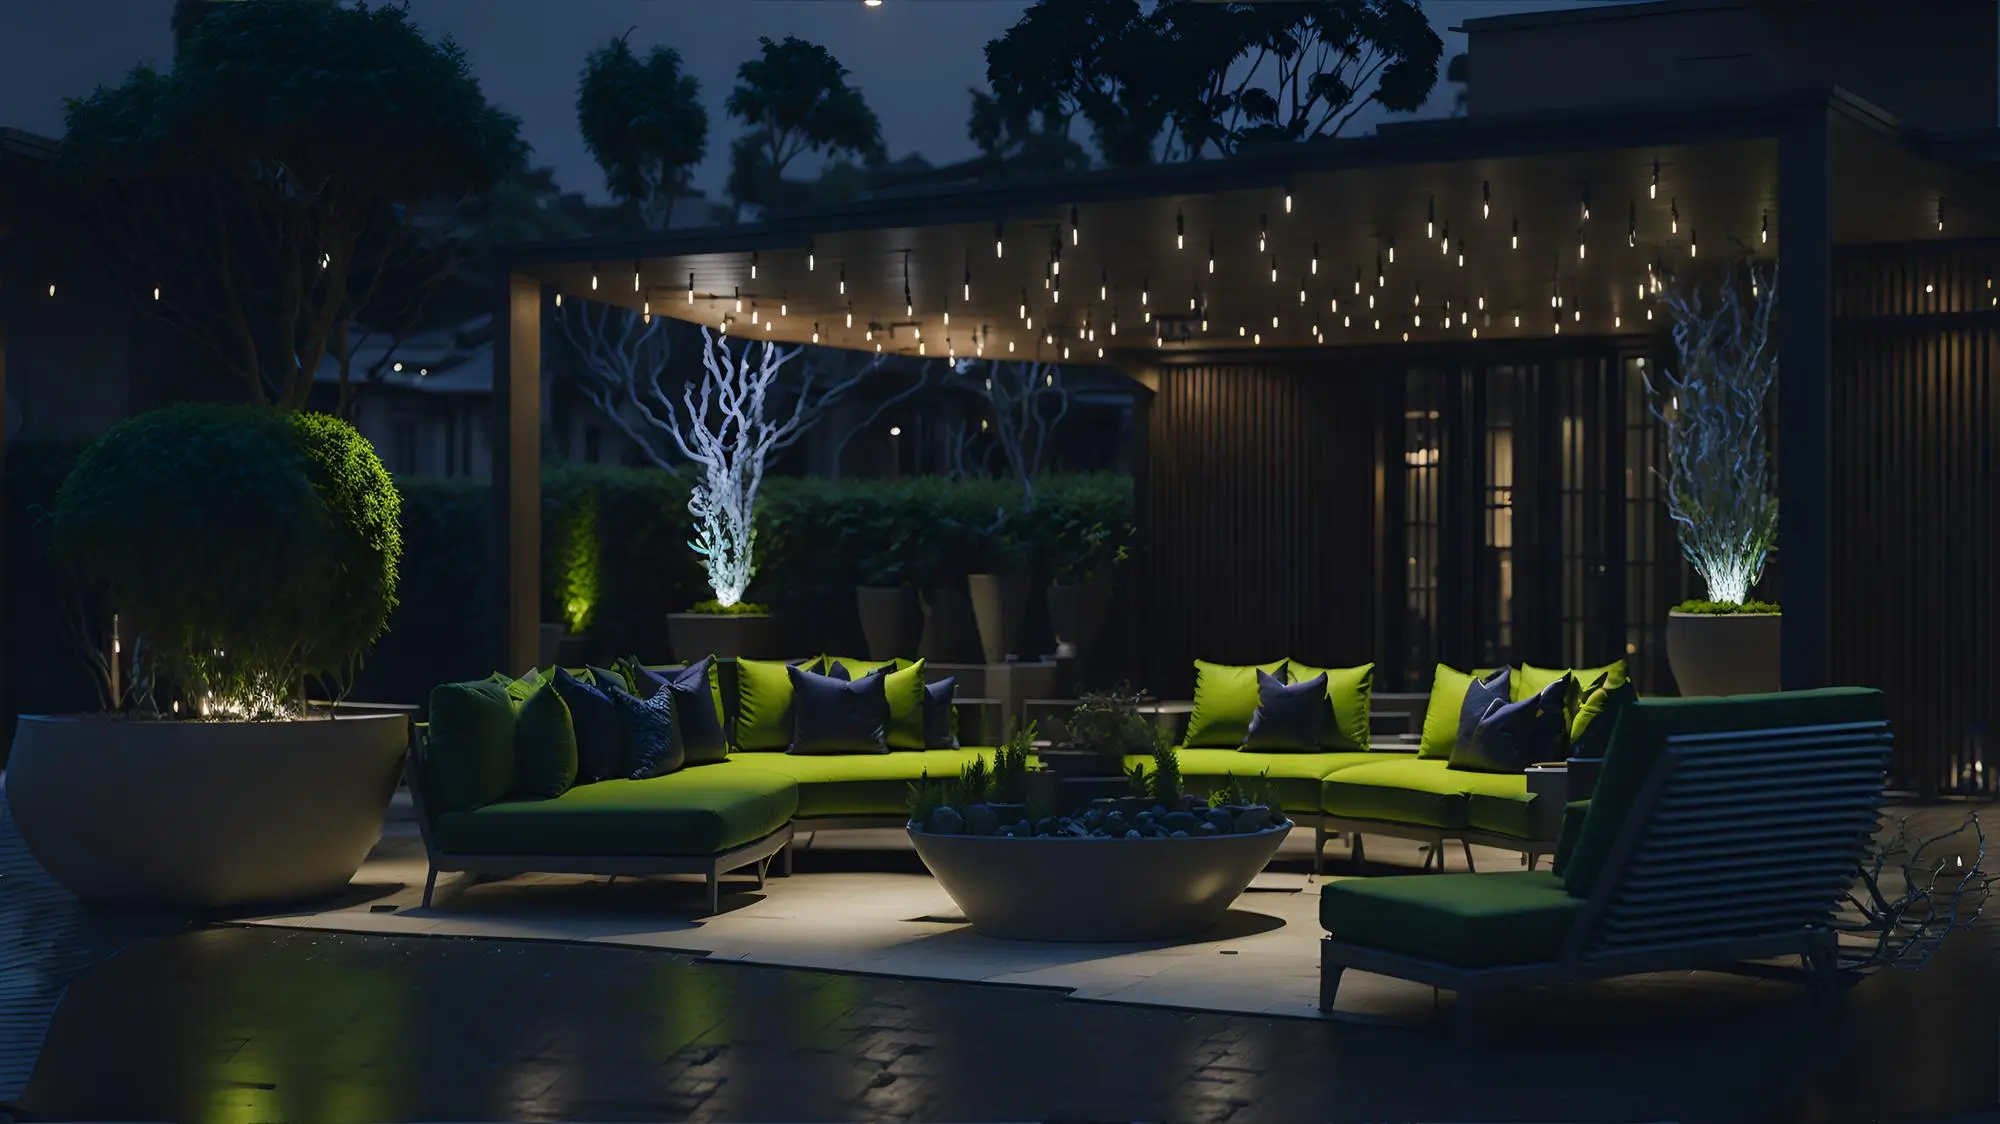 Night Lights for backyard